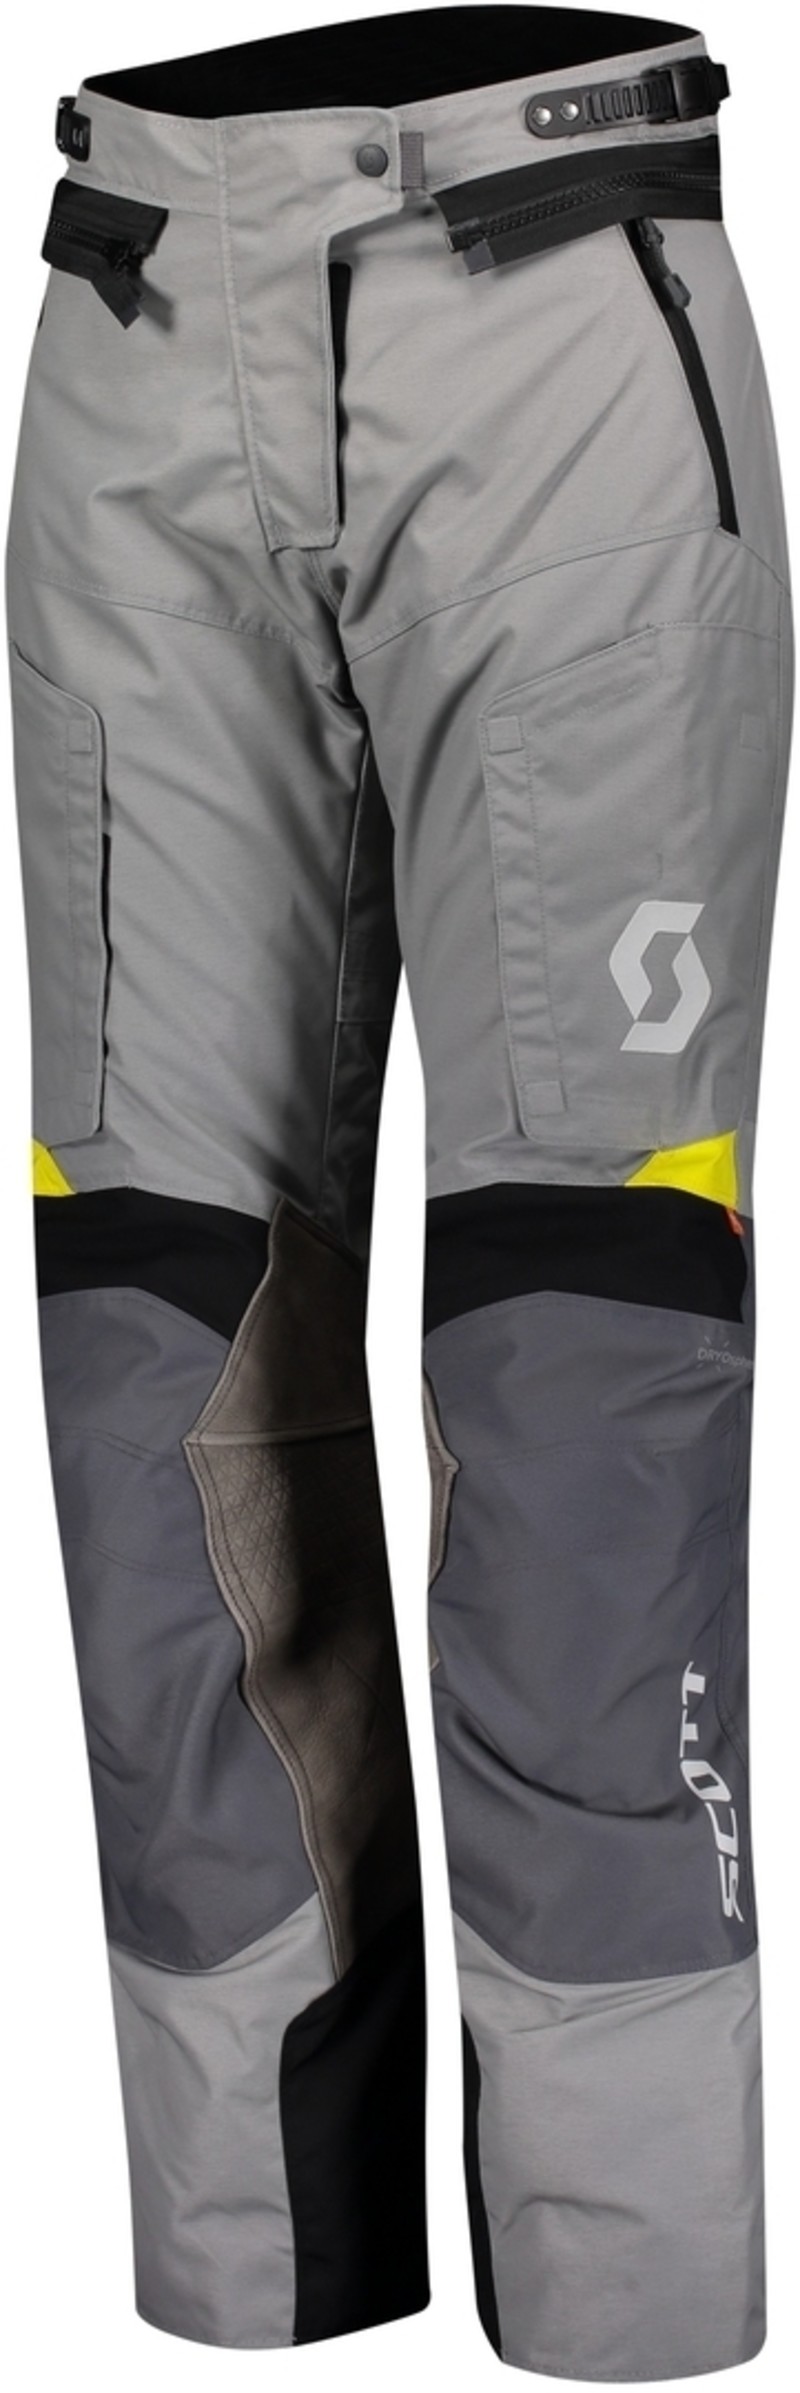 scott pants  dualraid dryo textile - motorcycle